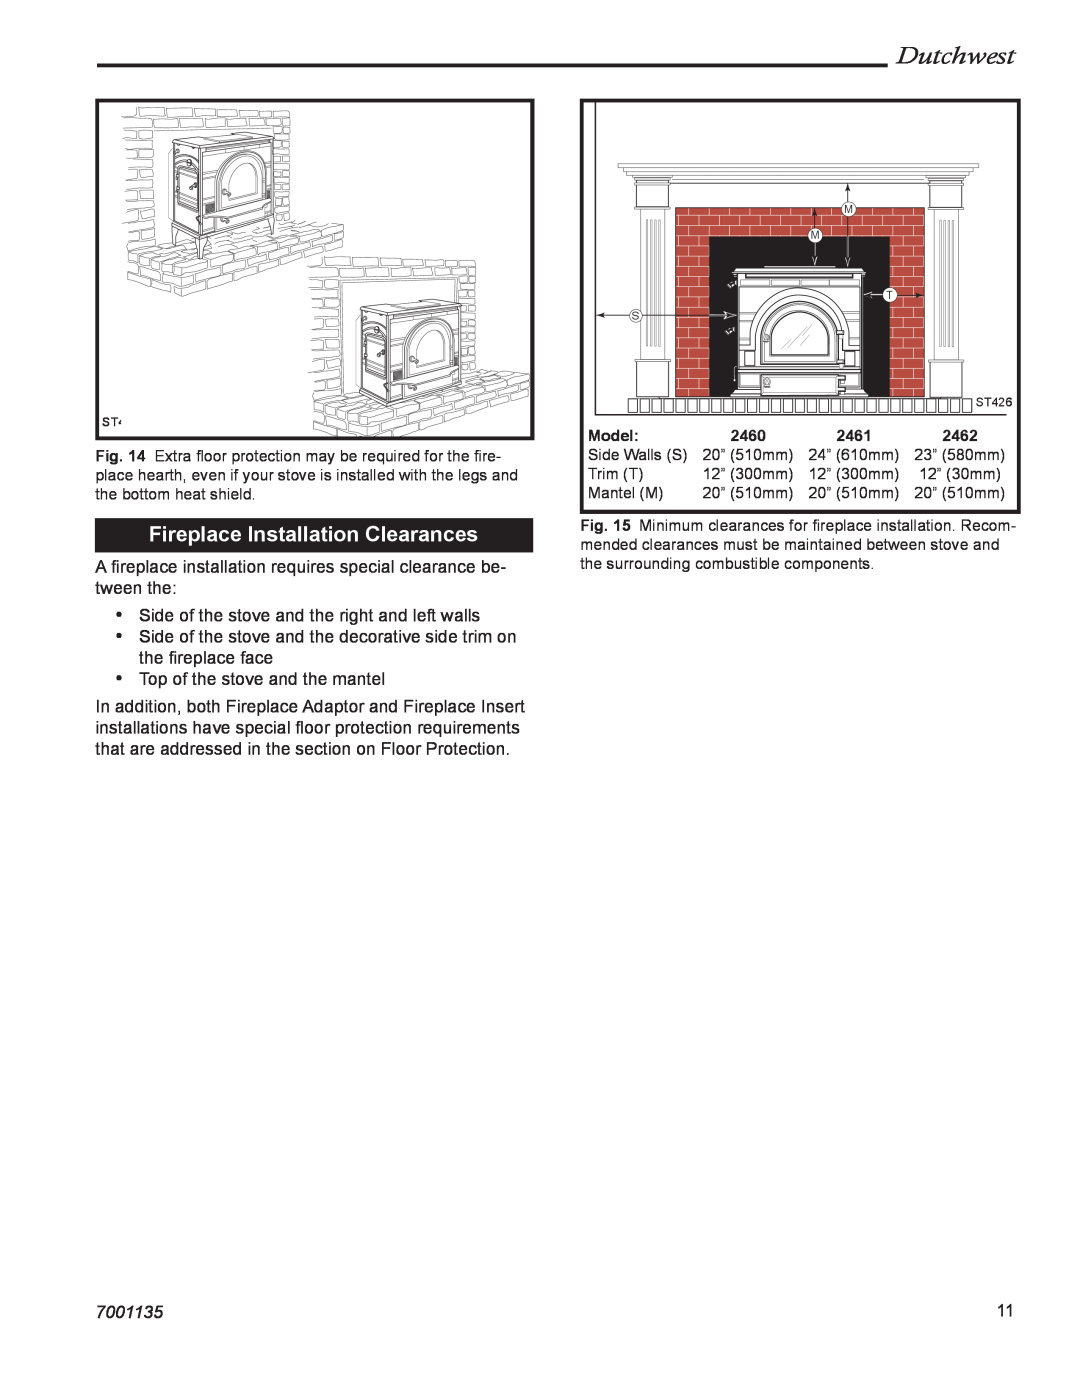 CFM Corporation 2461, 2462, 2460 manual Fireplace Installation Clearances, Dutchwest, 7001135 